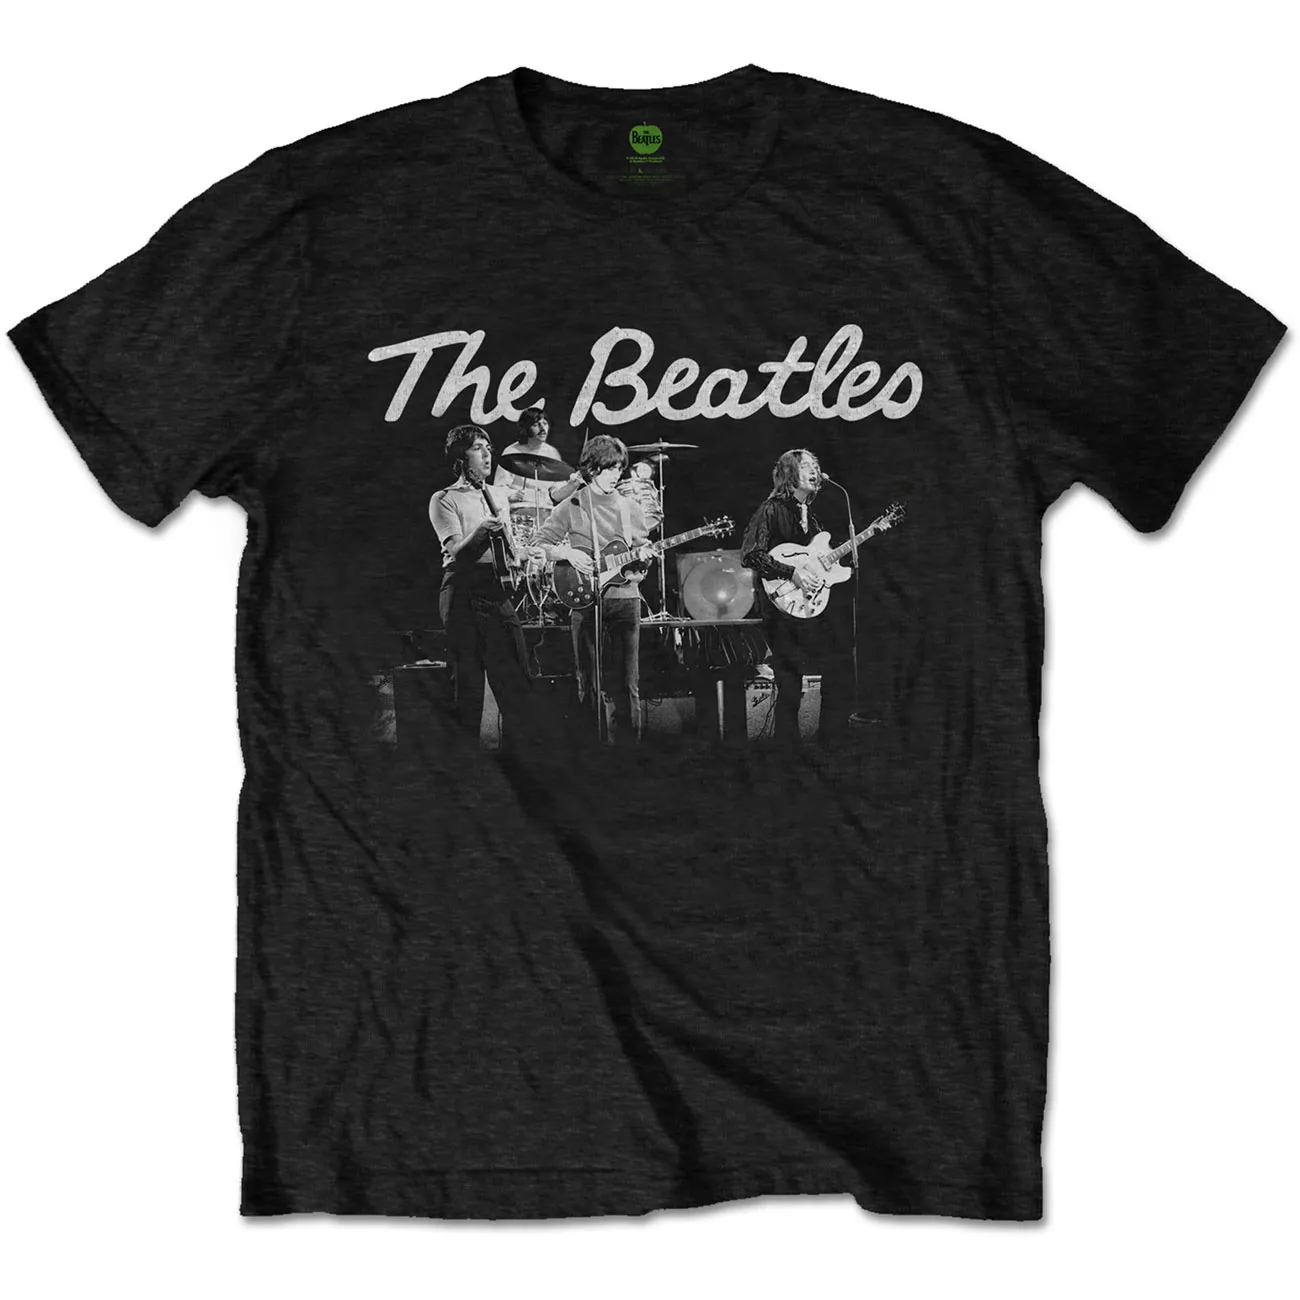 The Beatles - Unisex T-Shirt 1968 Live Photo artwork